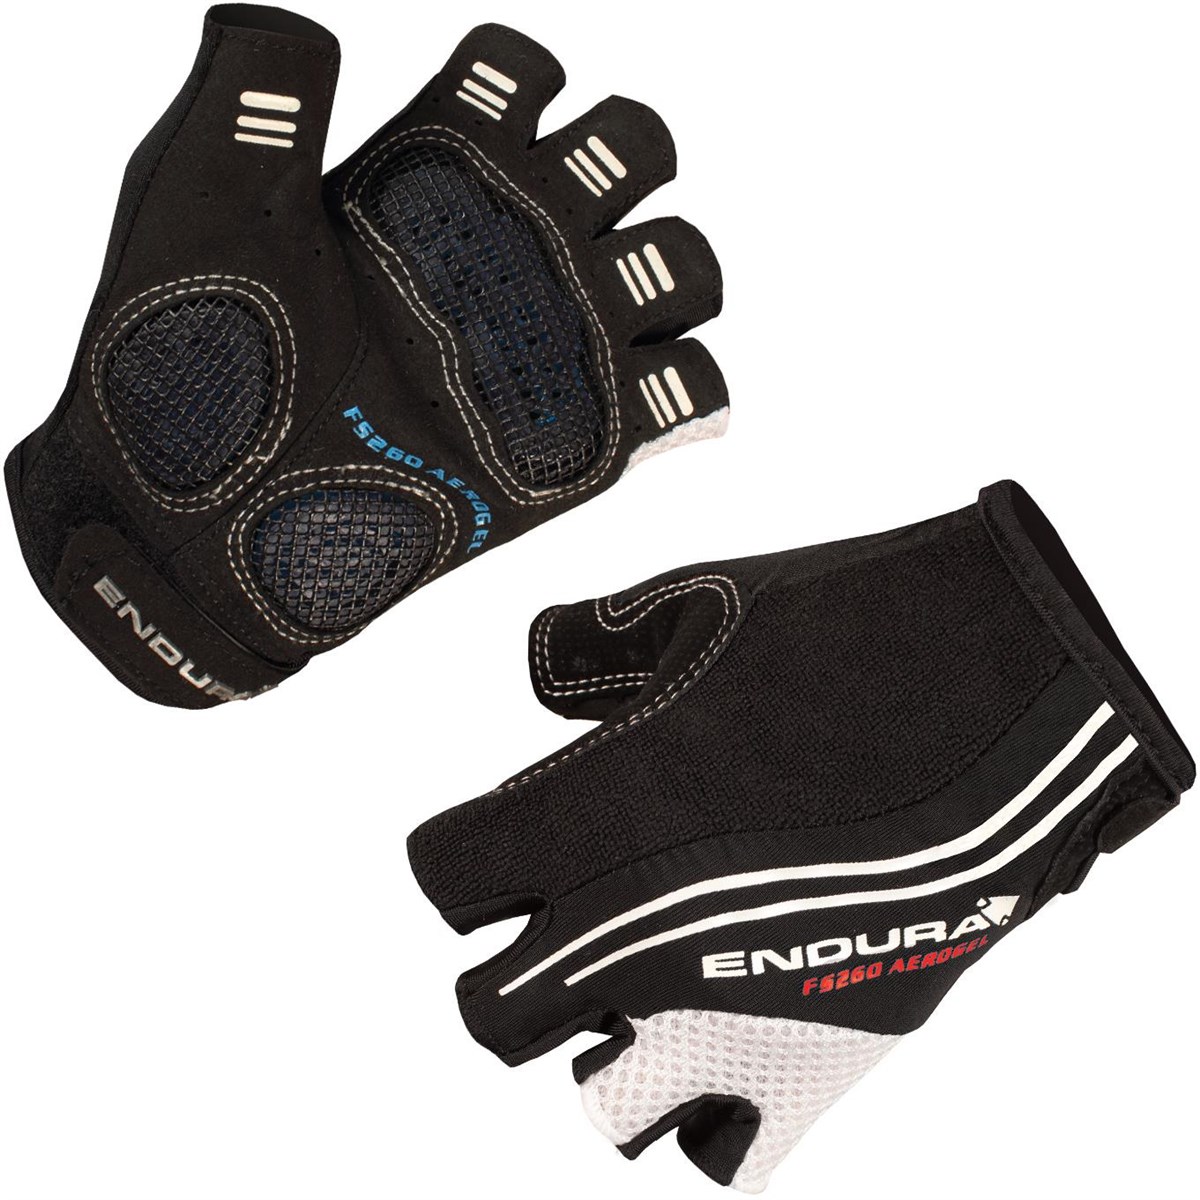 Endura FS260 Aerogel Mitt Short Fingered Cycling Gloves SS16 product image